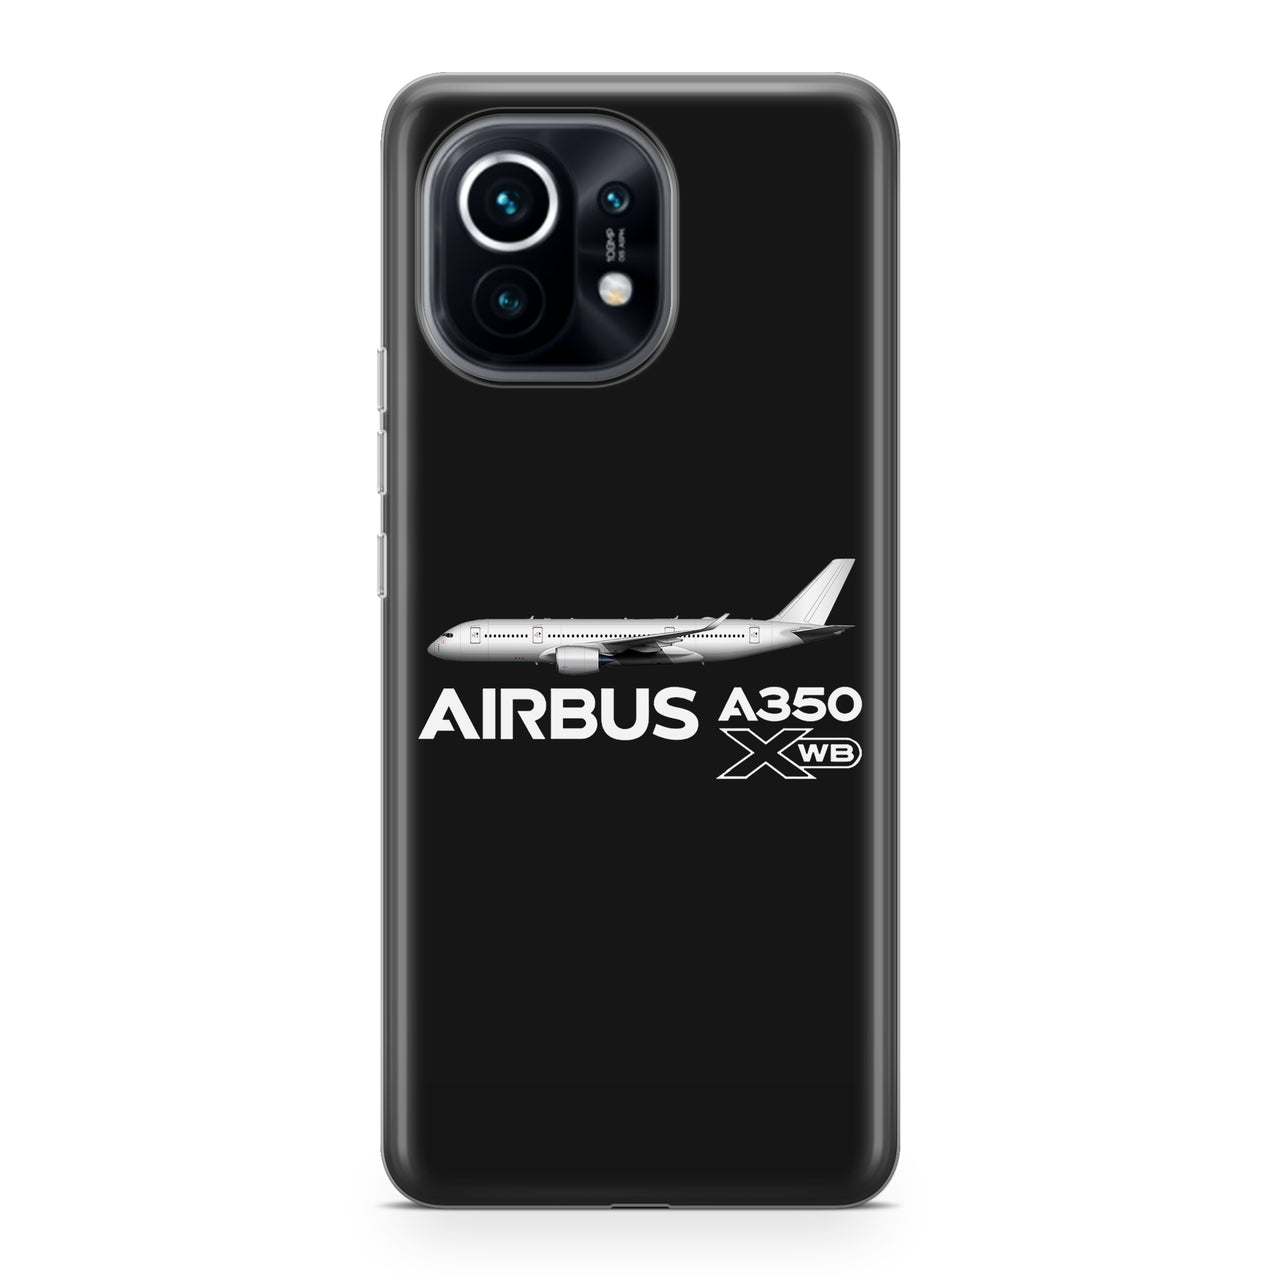 The Airbus A350 WXB Designed Xiaomi Cases